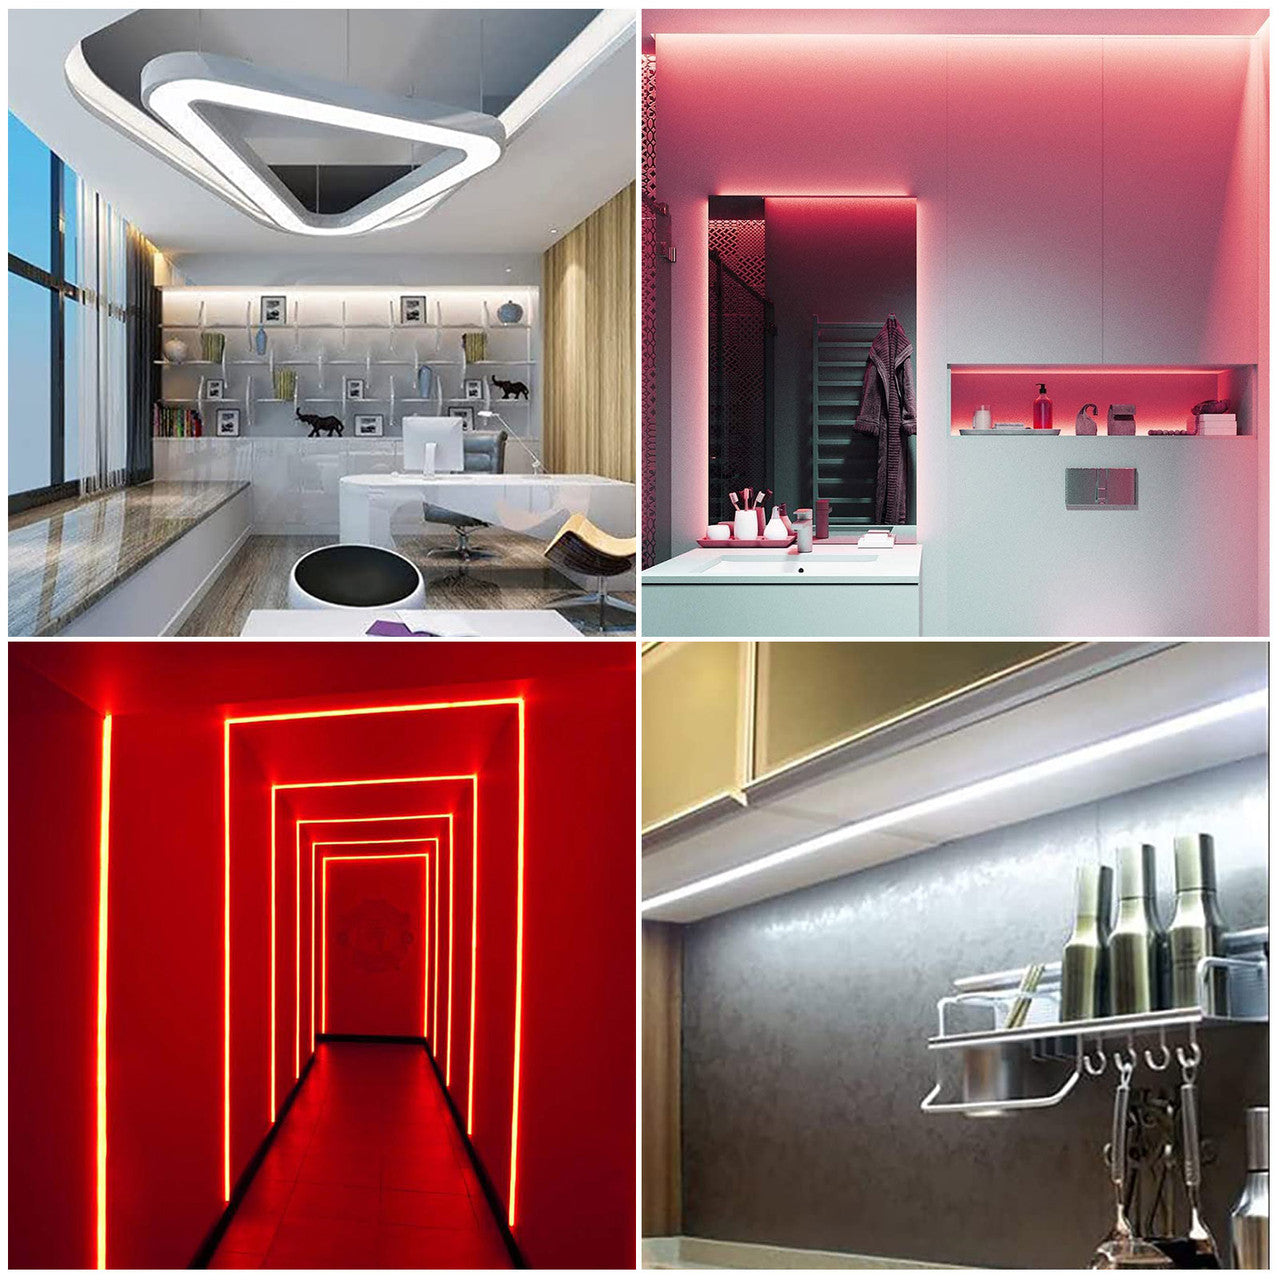 5M LED Neon Light Strip - DIY Neon Path Lighting Room Hallway Studio Theater Decor (Red)